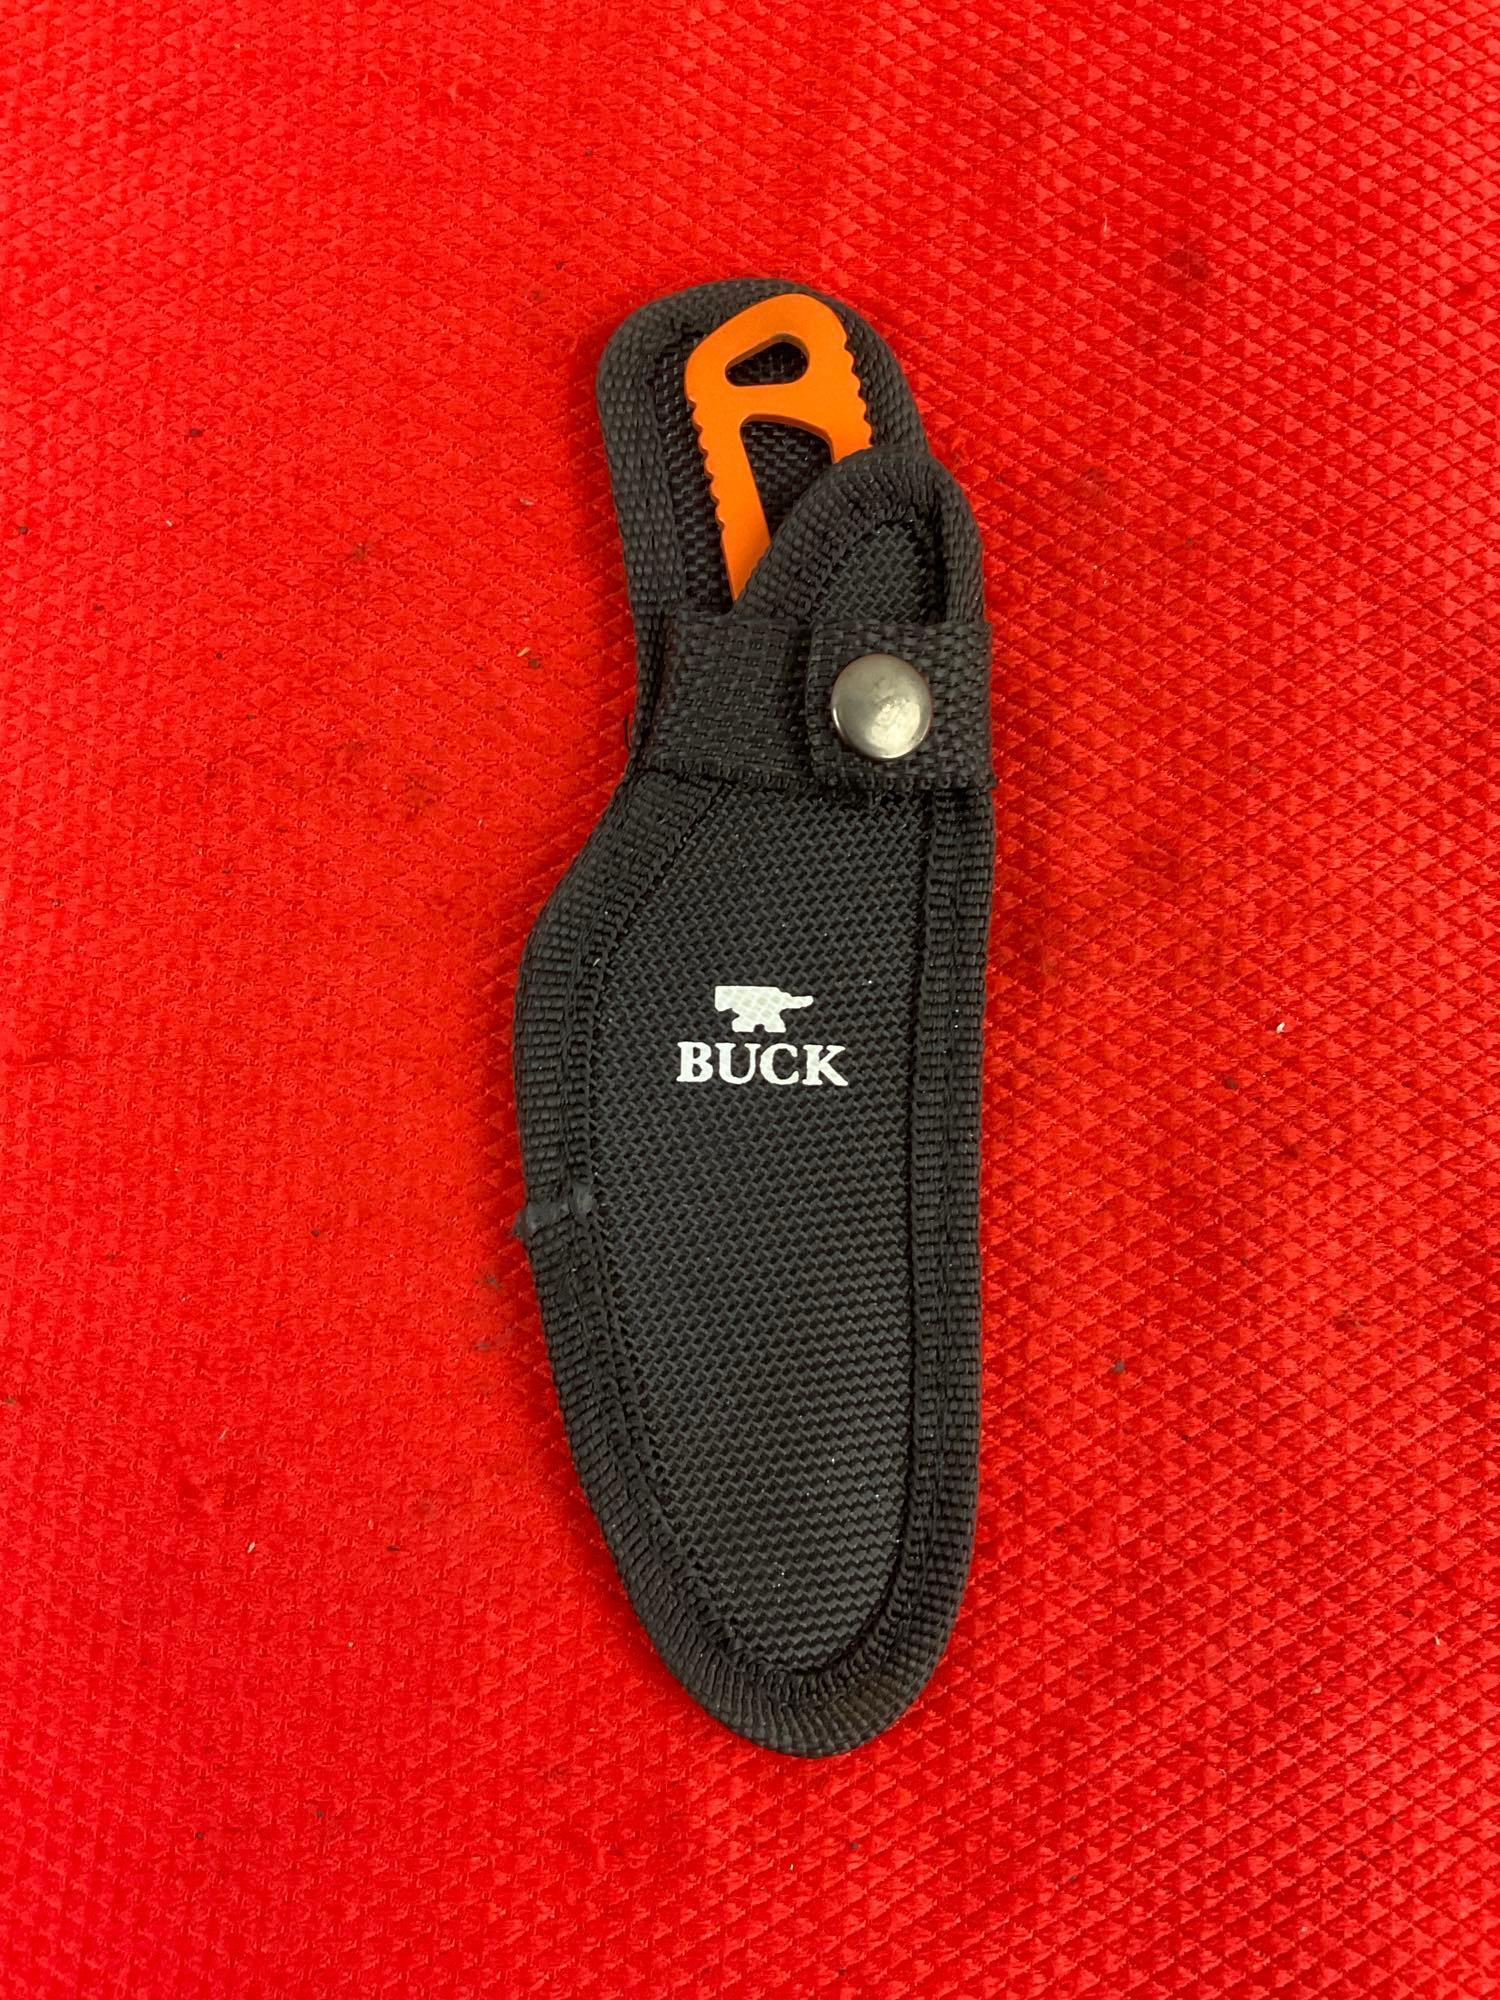 10 pcs Modern Buck Pocket Knife Assortment. Models 135, 283, 316, 318, 325, 425, 526. See pics.